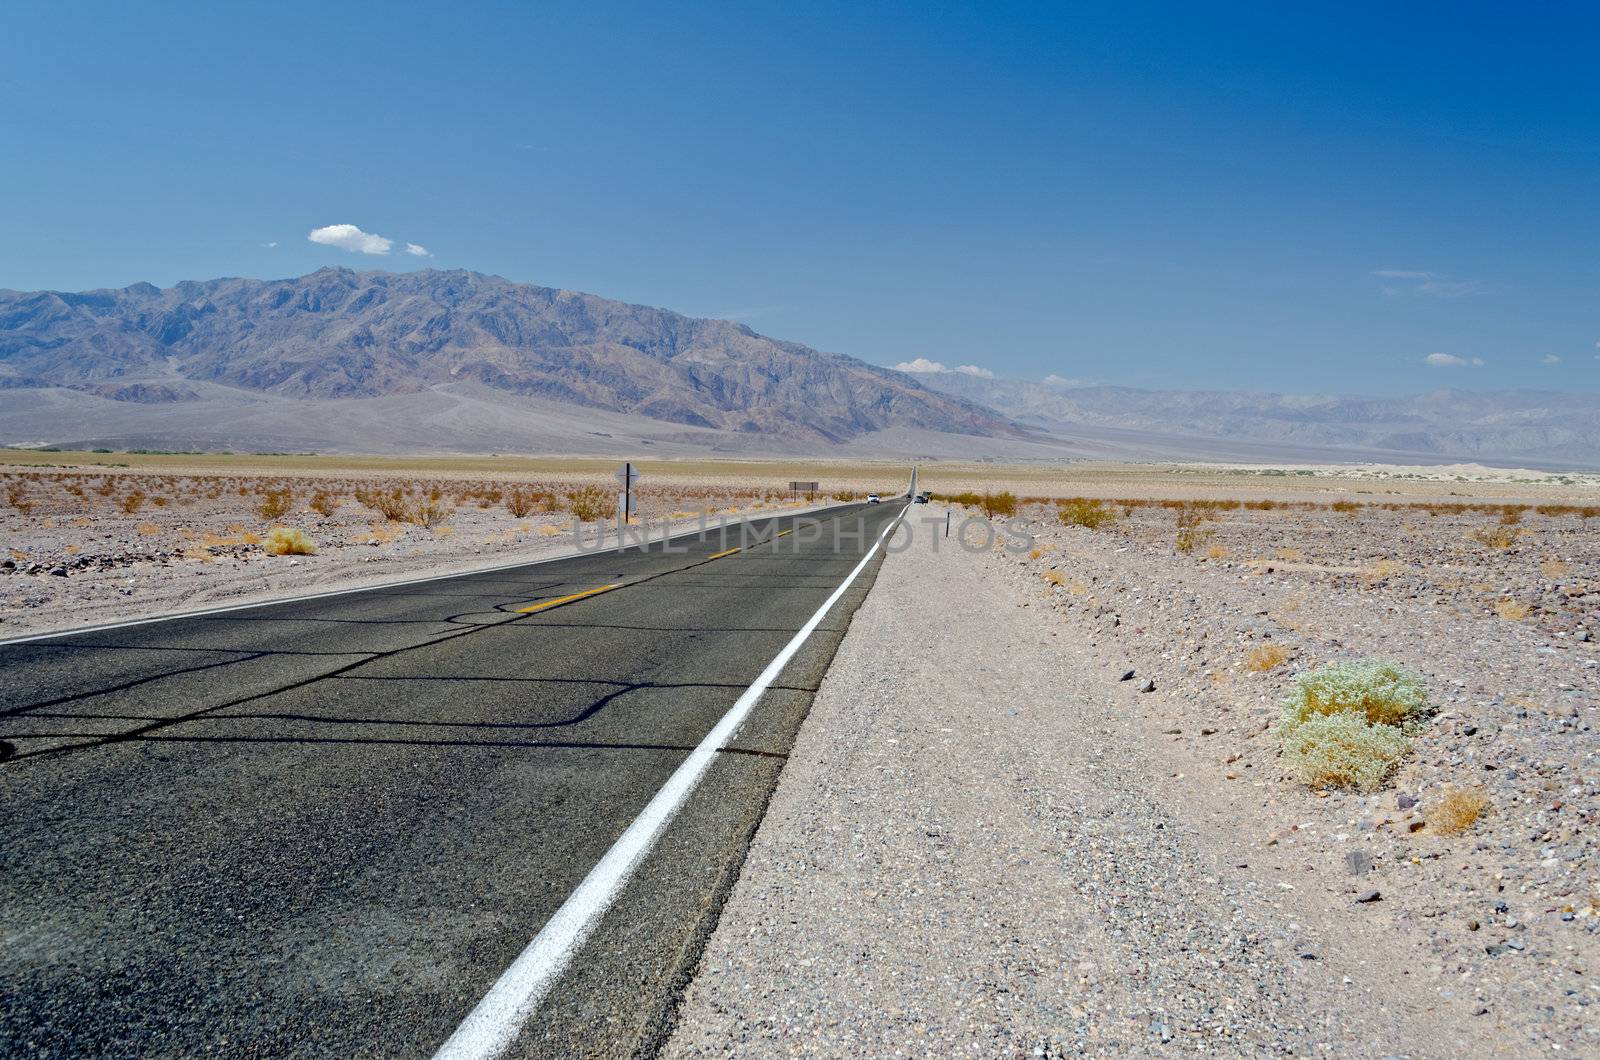 Desolated Road, Death Valley, California